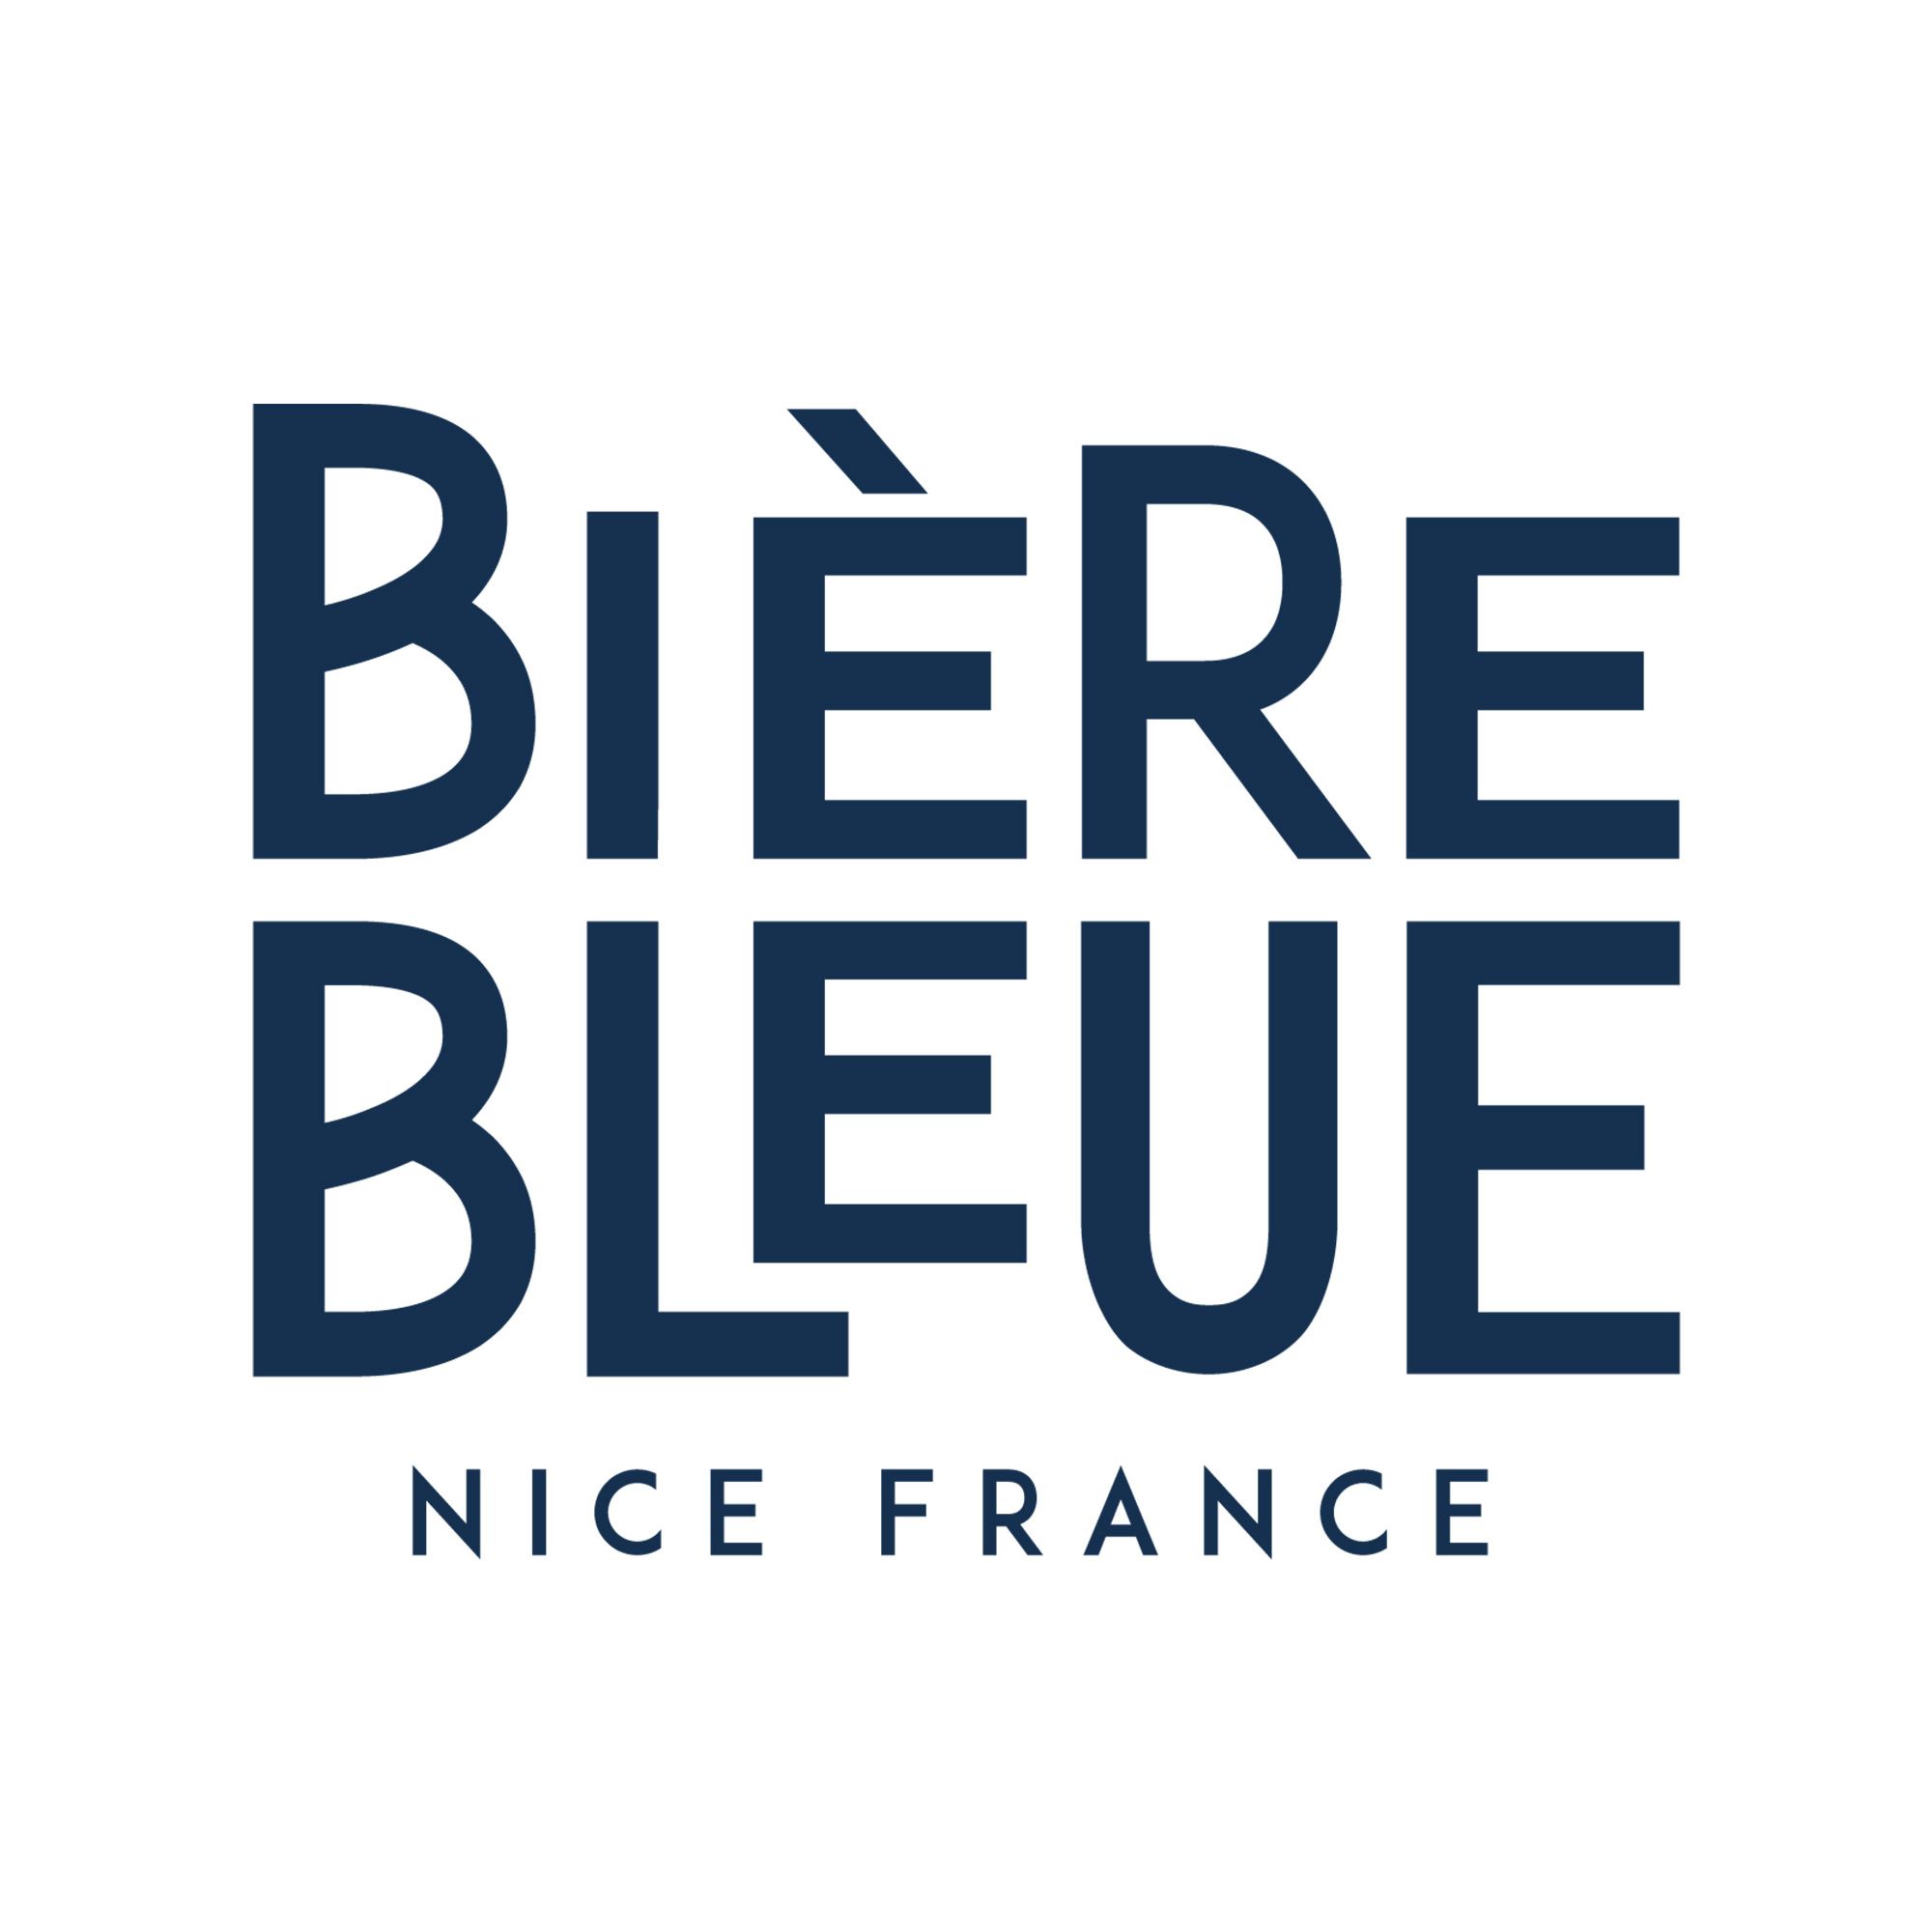 Brasserie BLEUE craft beer brewed in Nice France